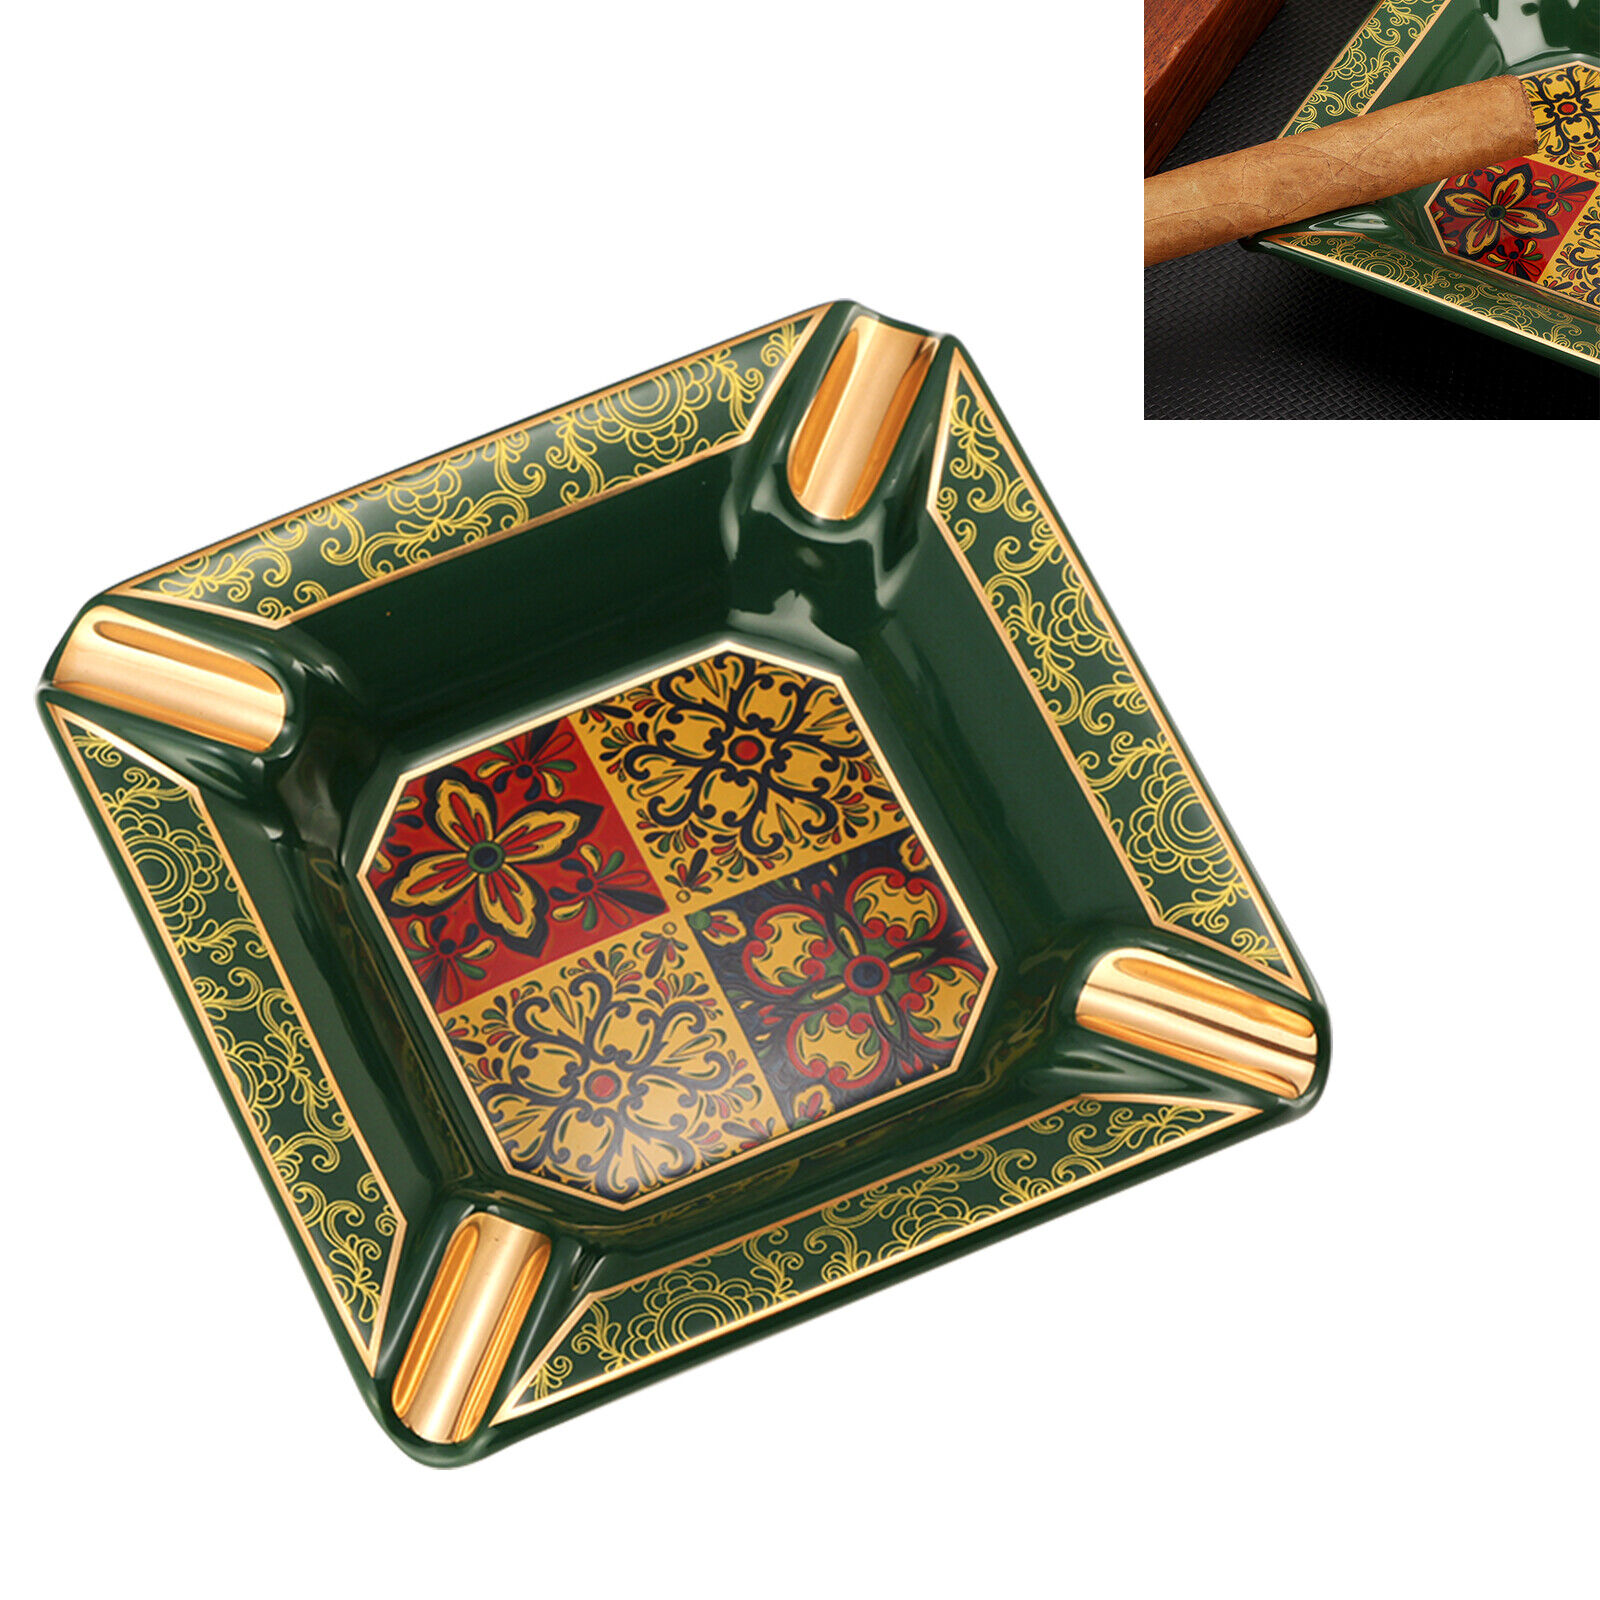 Lubinski Luxury Ceramic Cigar Ashtray 4CT Holder Large Square Art Deco Gift Box